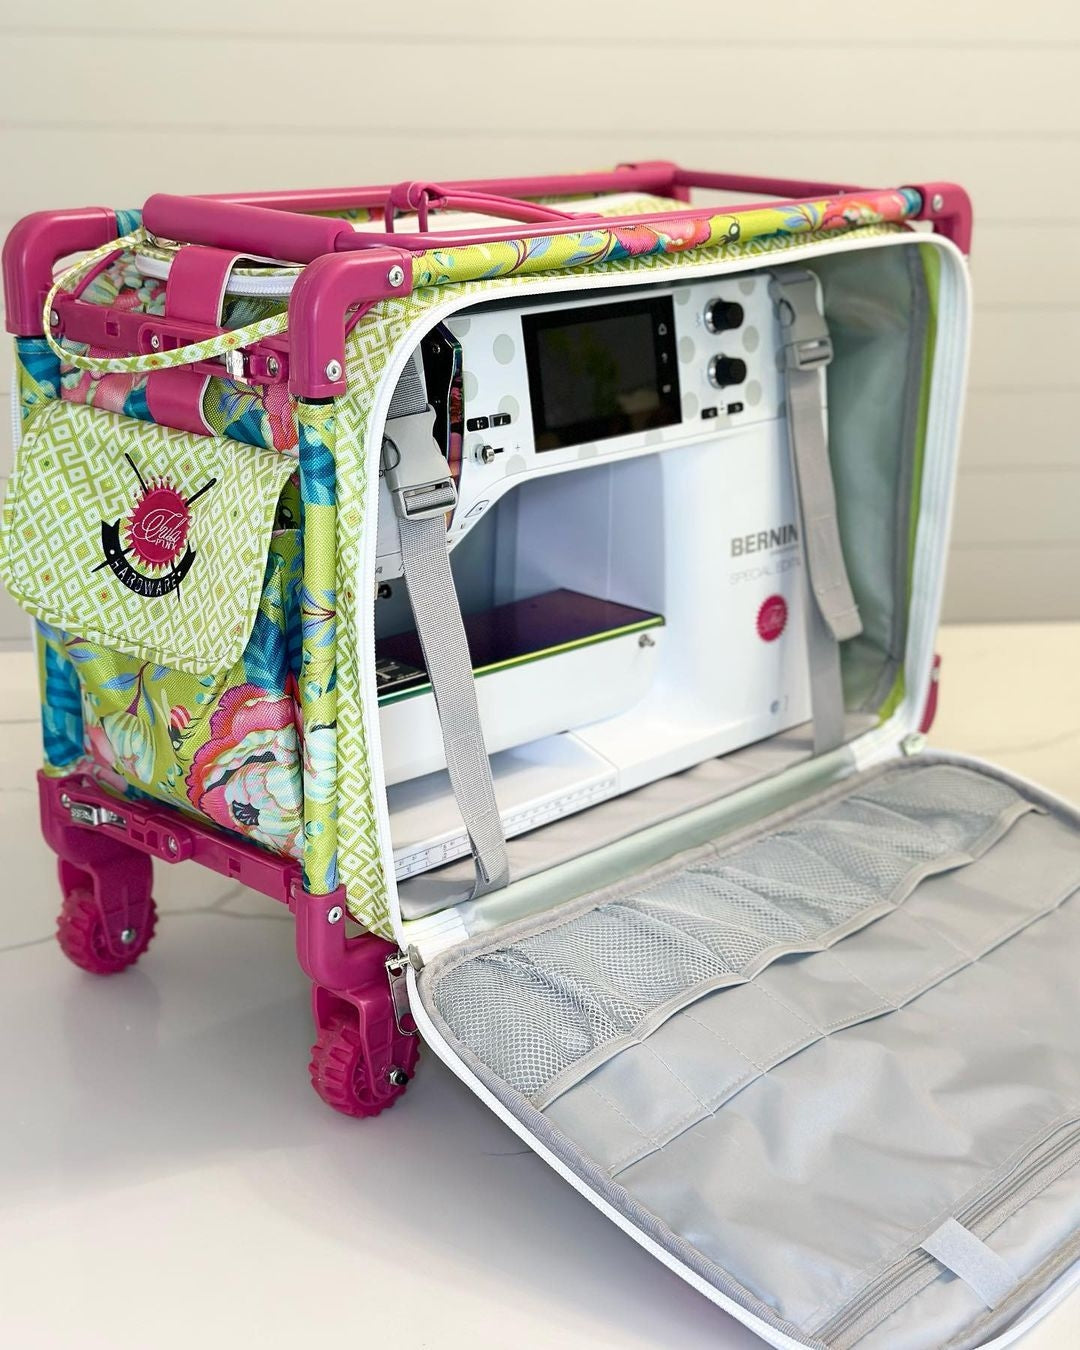 Tula Pink Kabloom Tote Sewing Machine Bag - L size